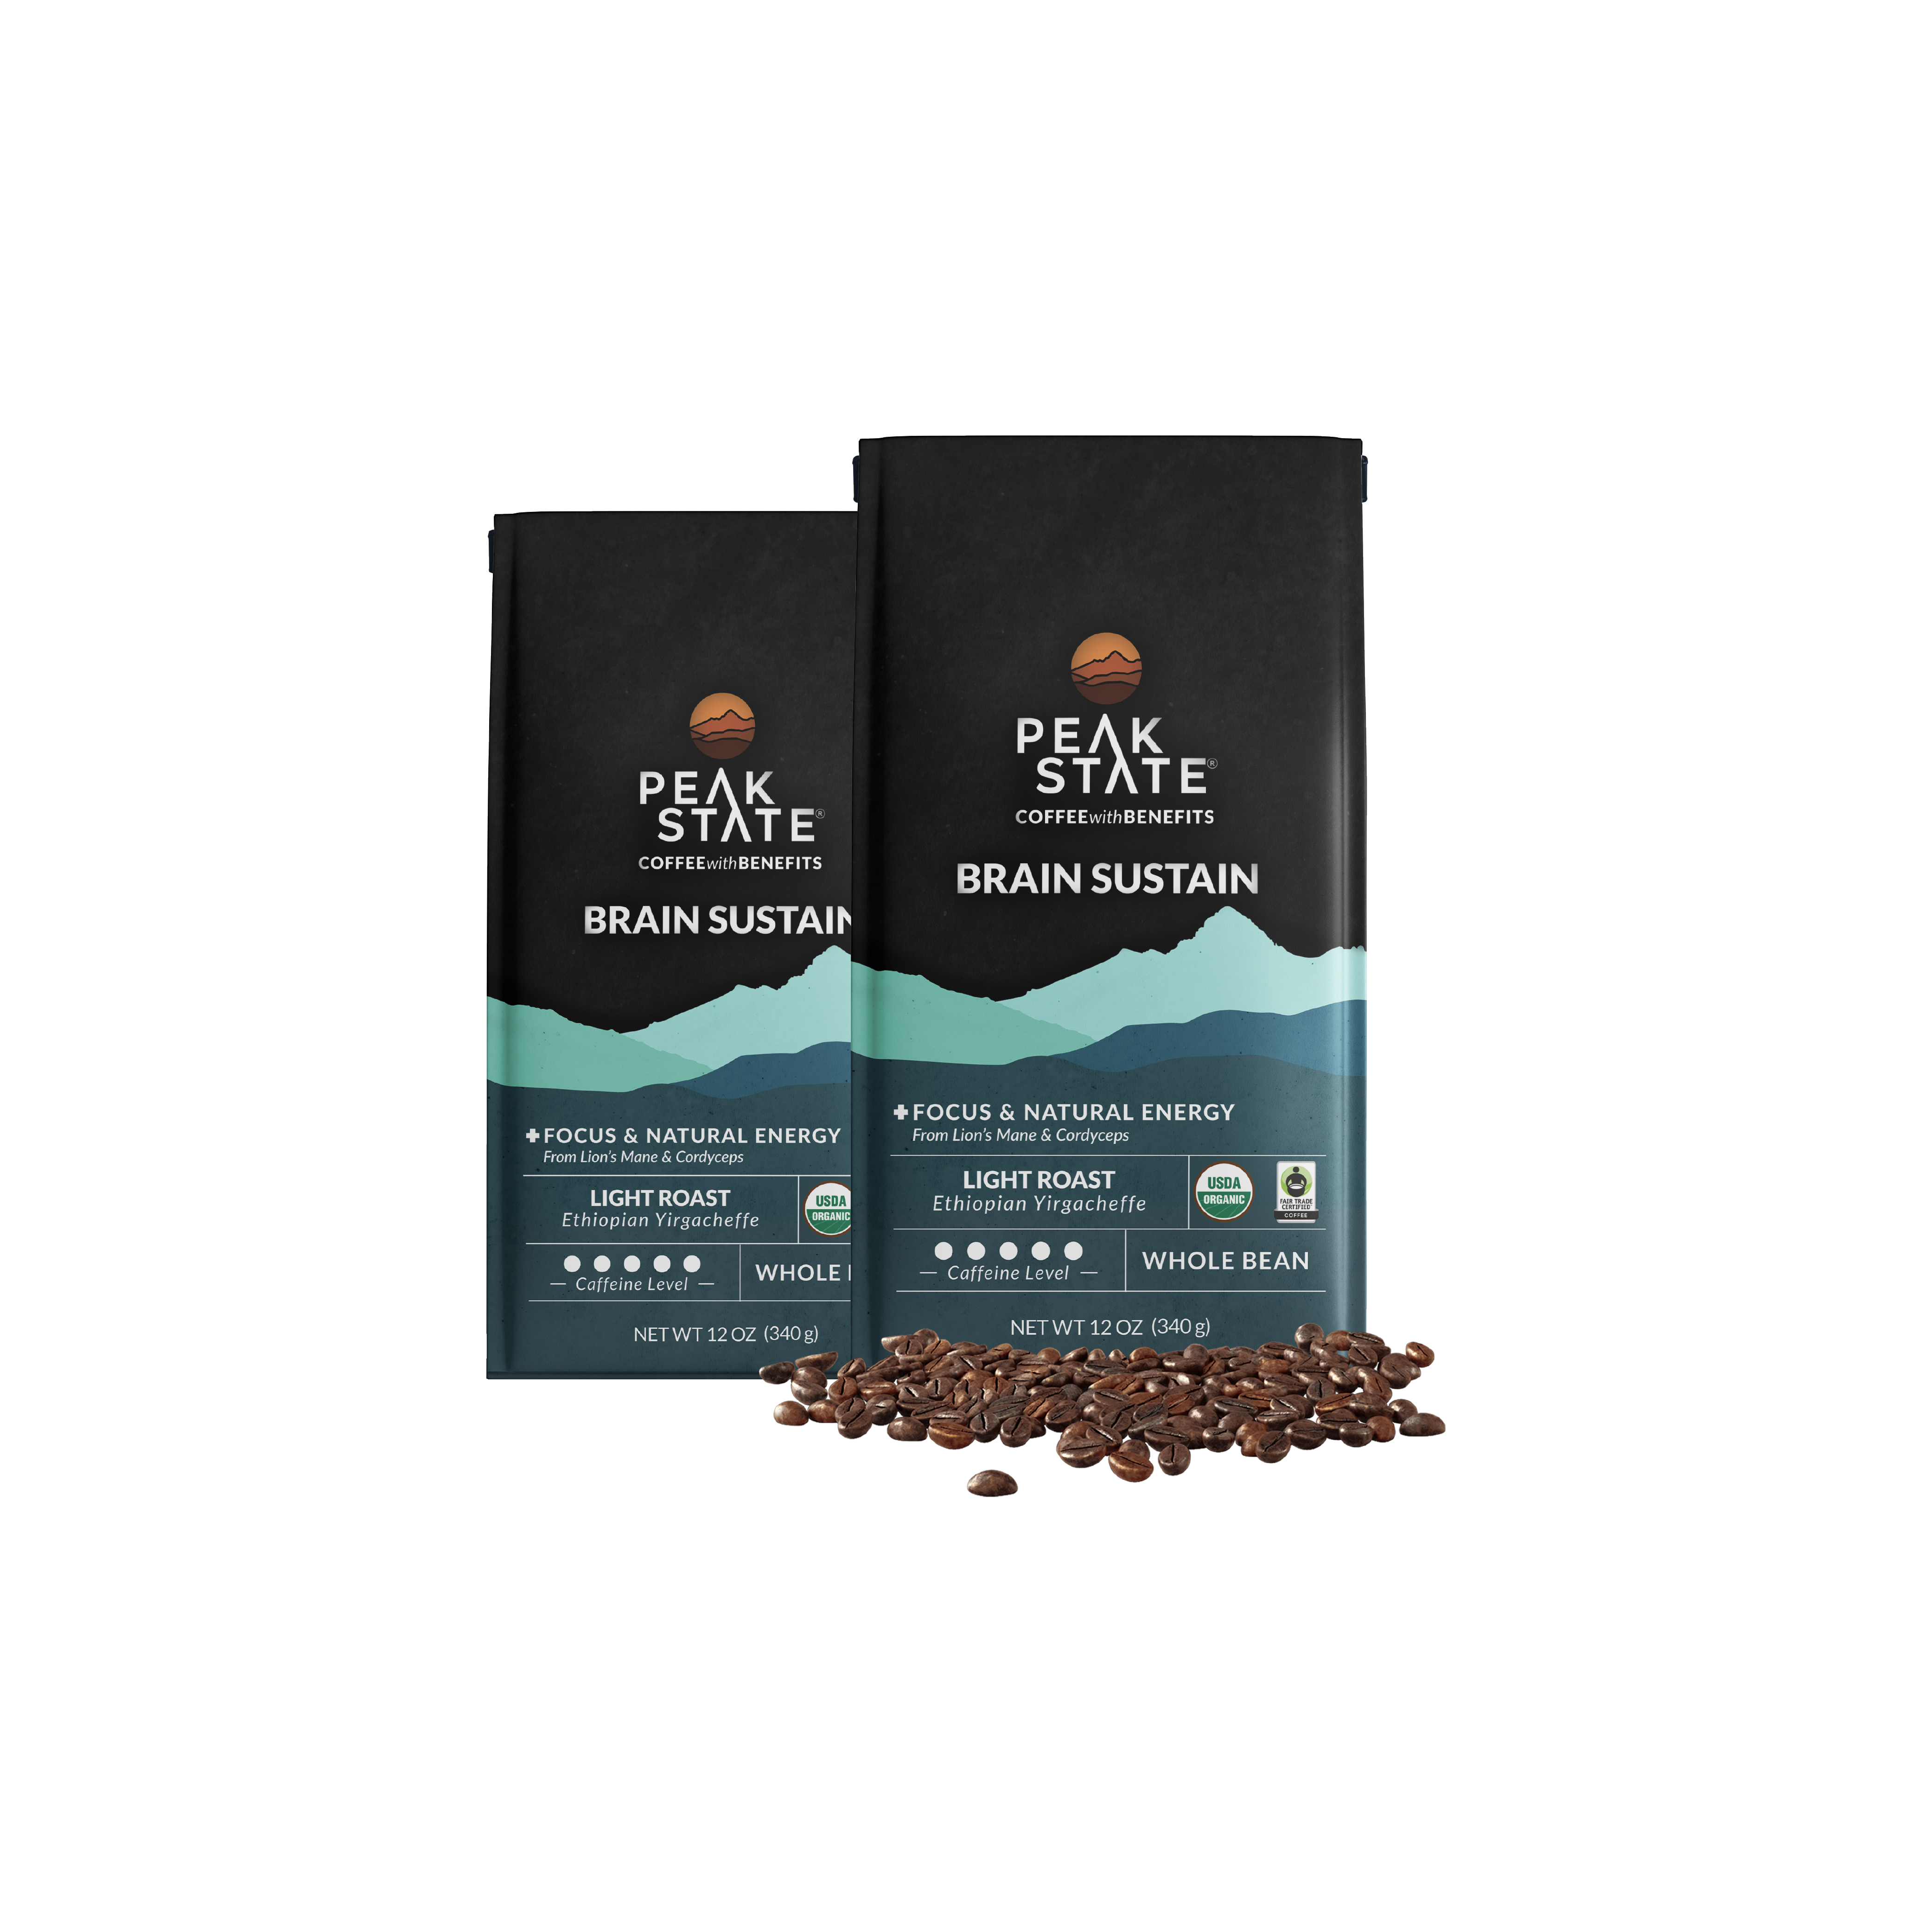 Peak State's Brain Sustain coffee blend, 2x 12 oz bags. 